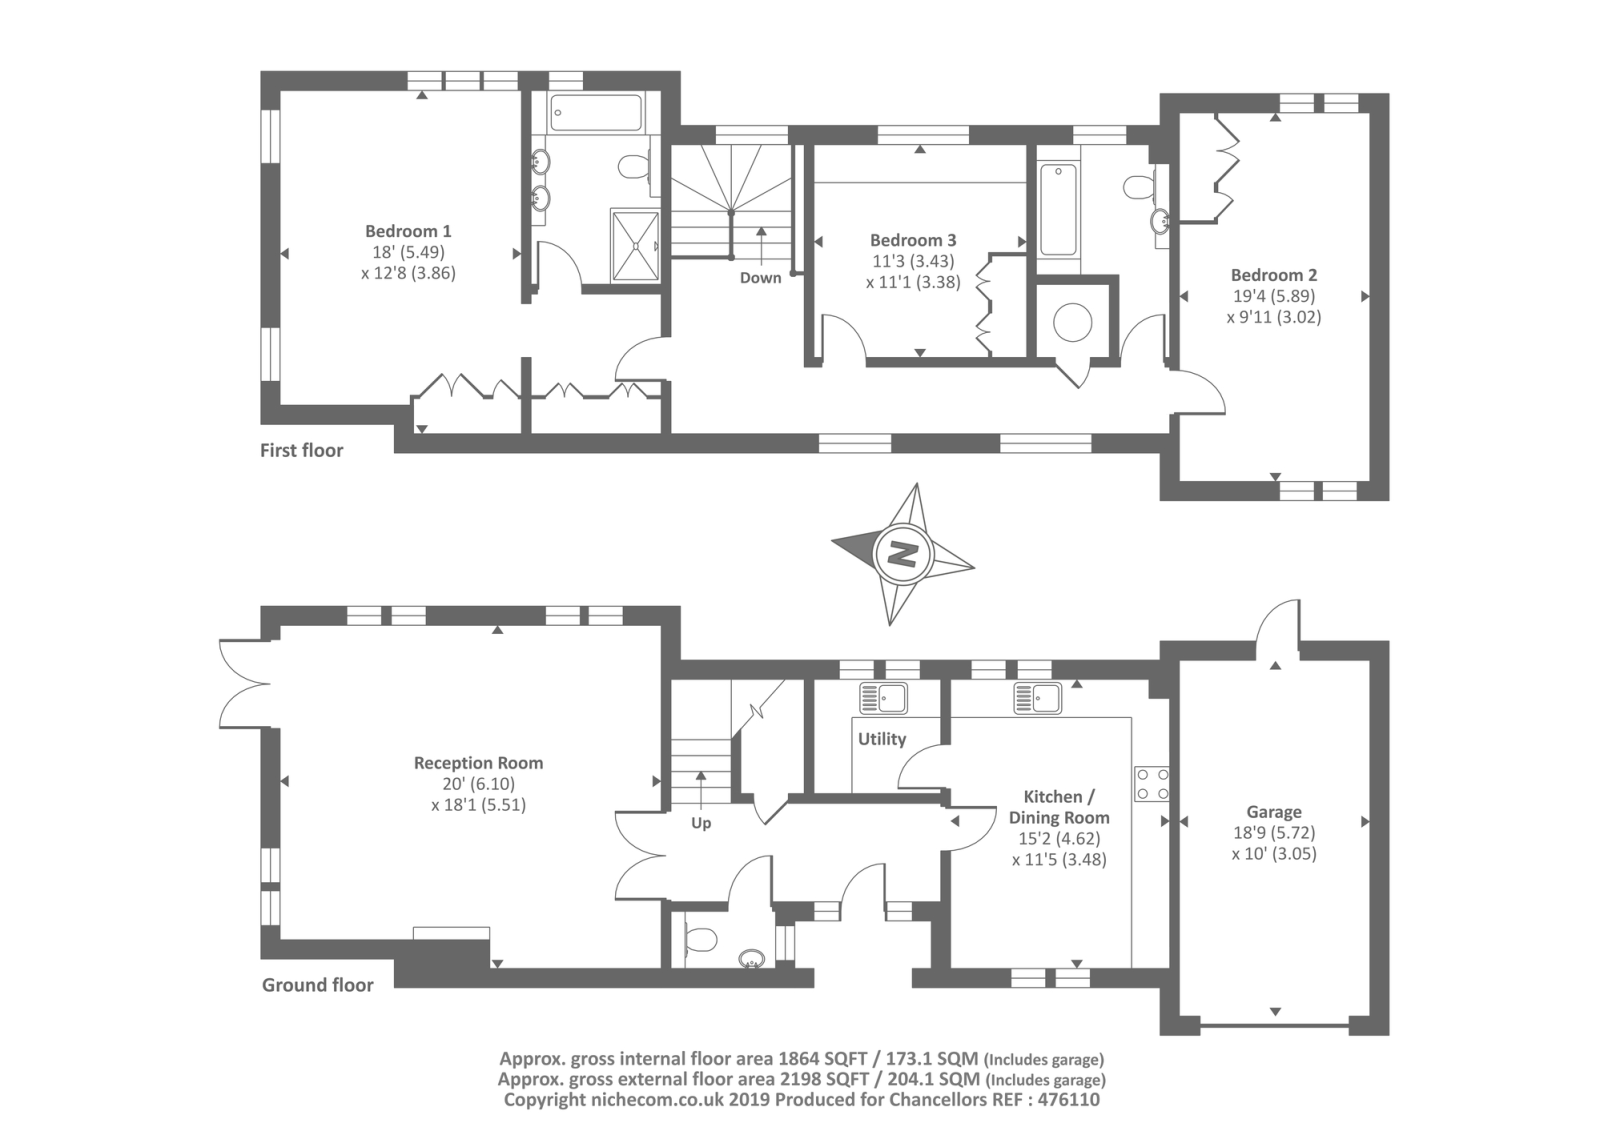 3 Bedrooms Terraced house for sale in Virginia Water, Surrey GU25